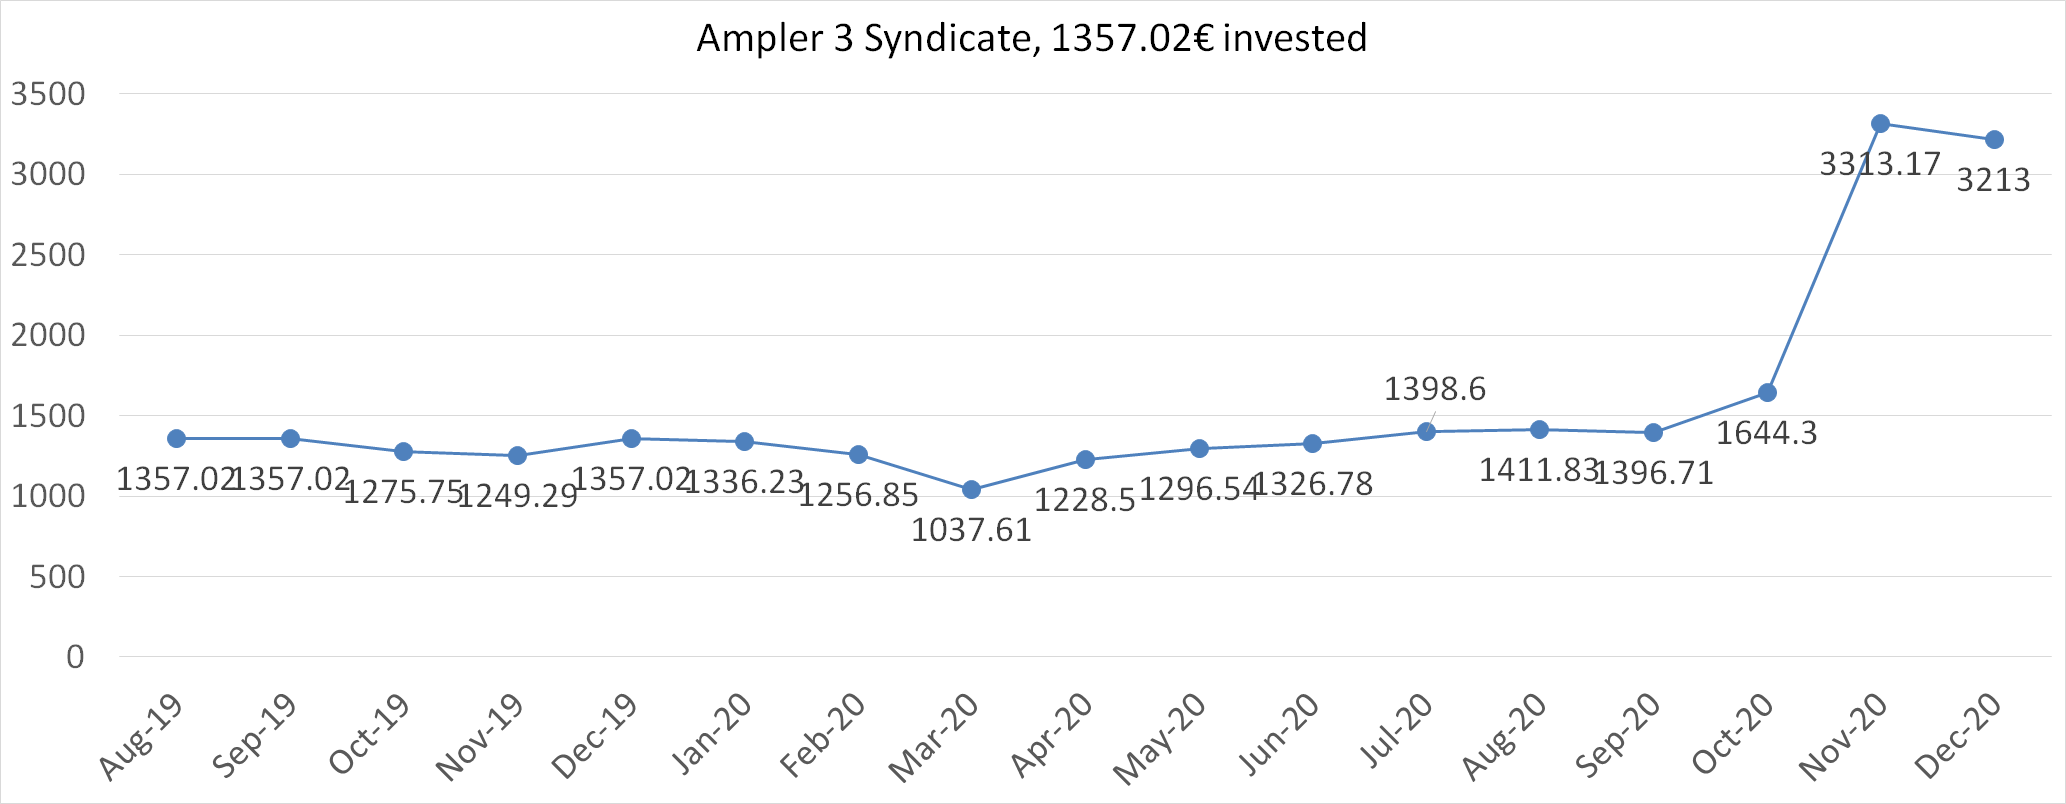 Ampler 3 syndicate worth 3213 euros in december 2020